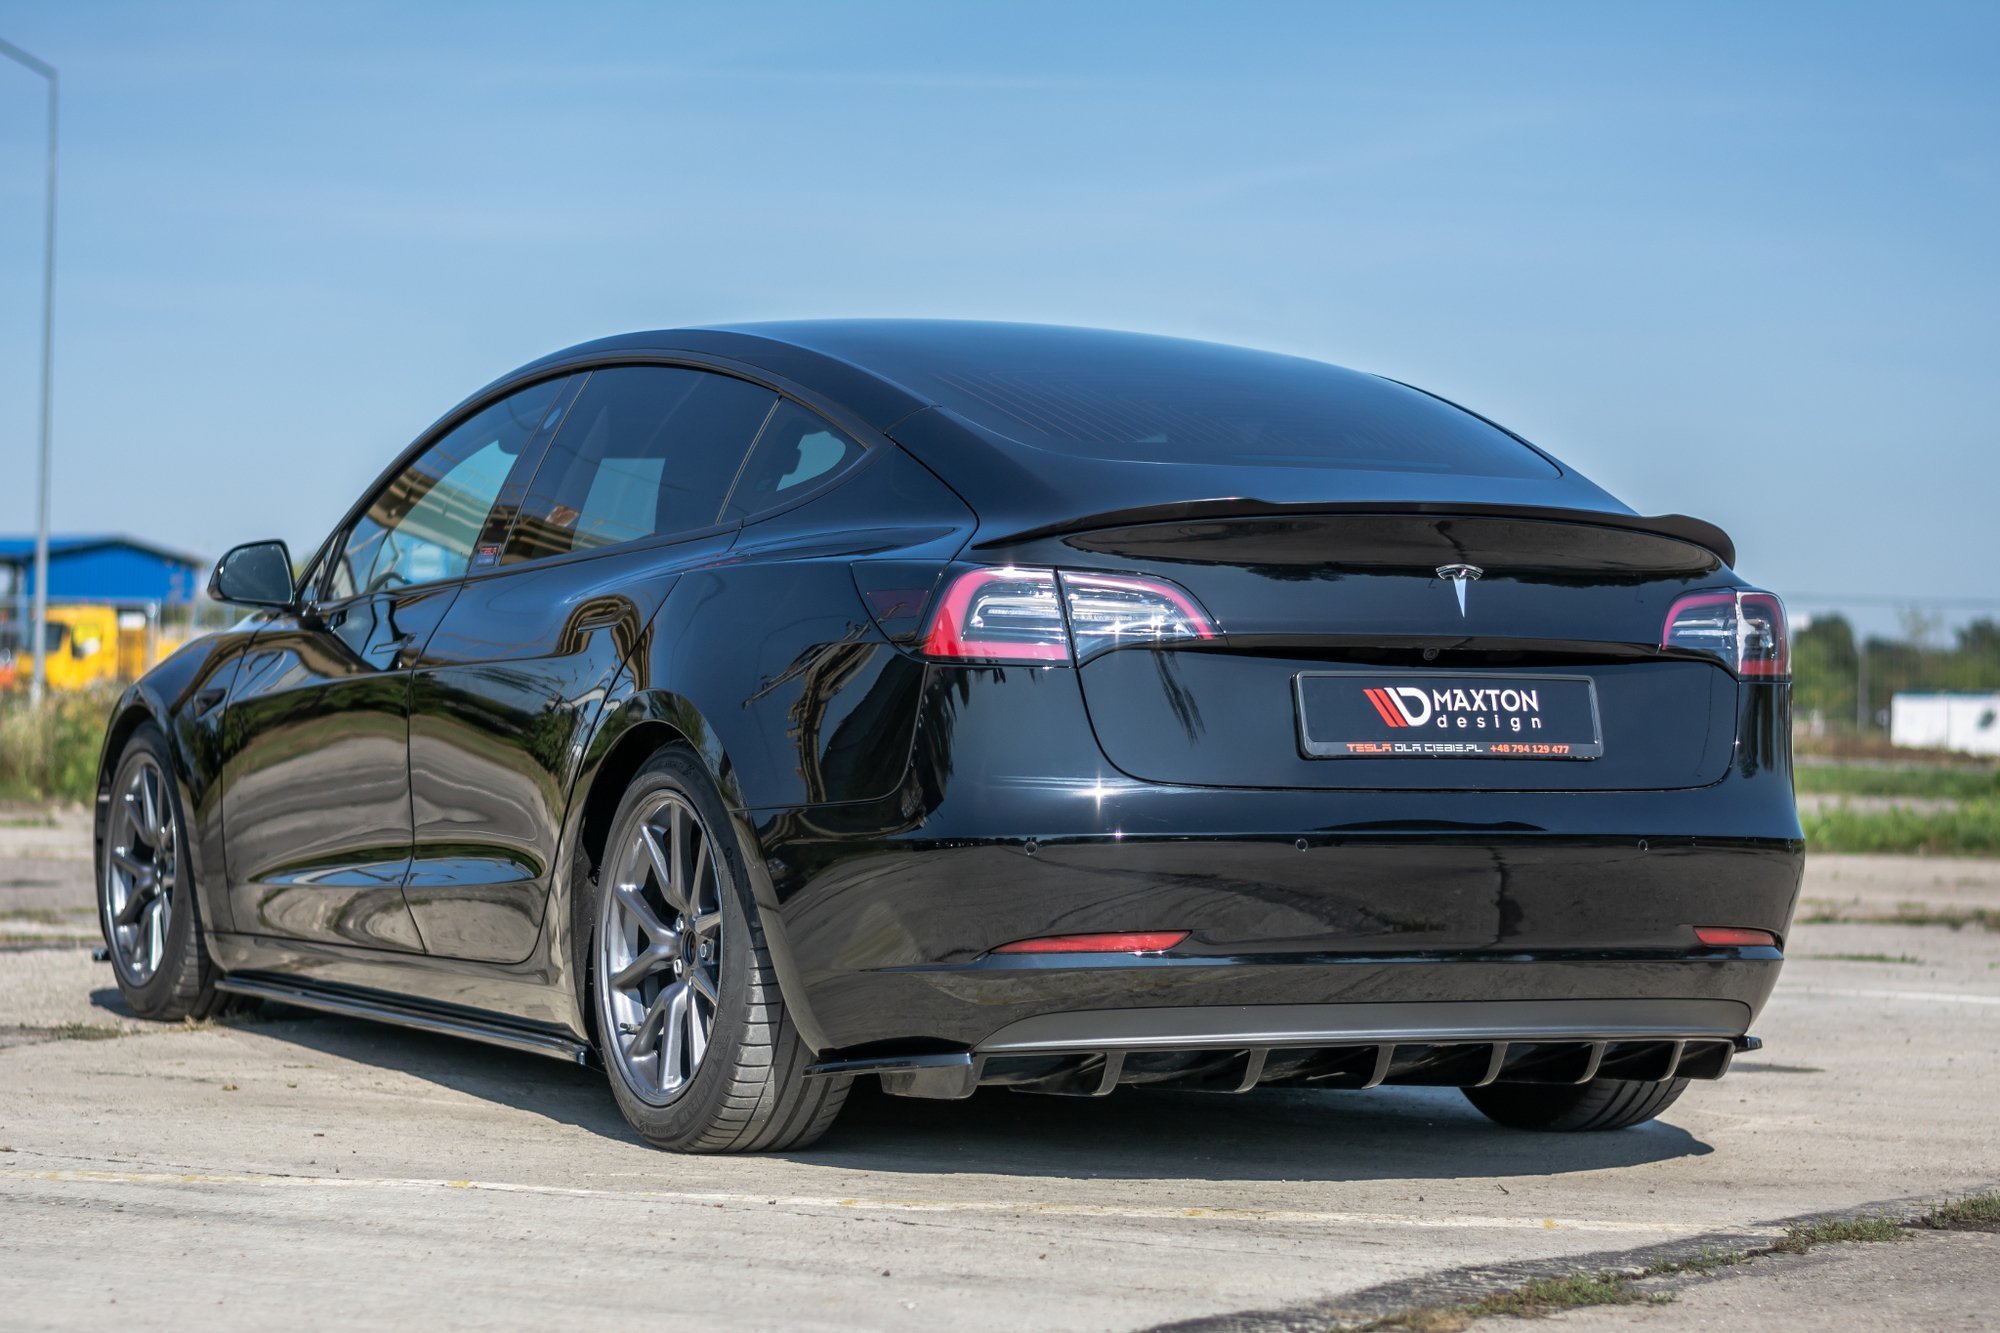 Der nächste Tesla-Model-3-Prototyp: Neue Felgen und Spekulation um  Frontdesign